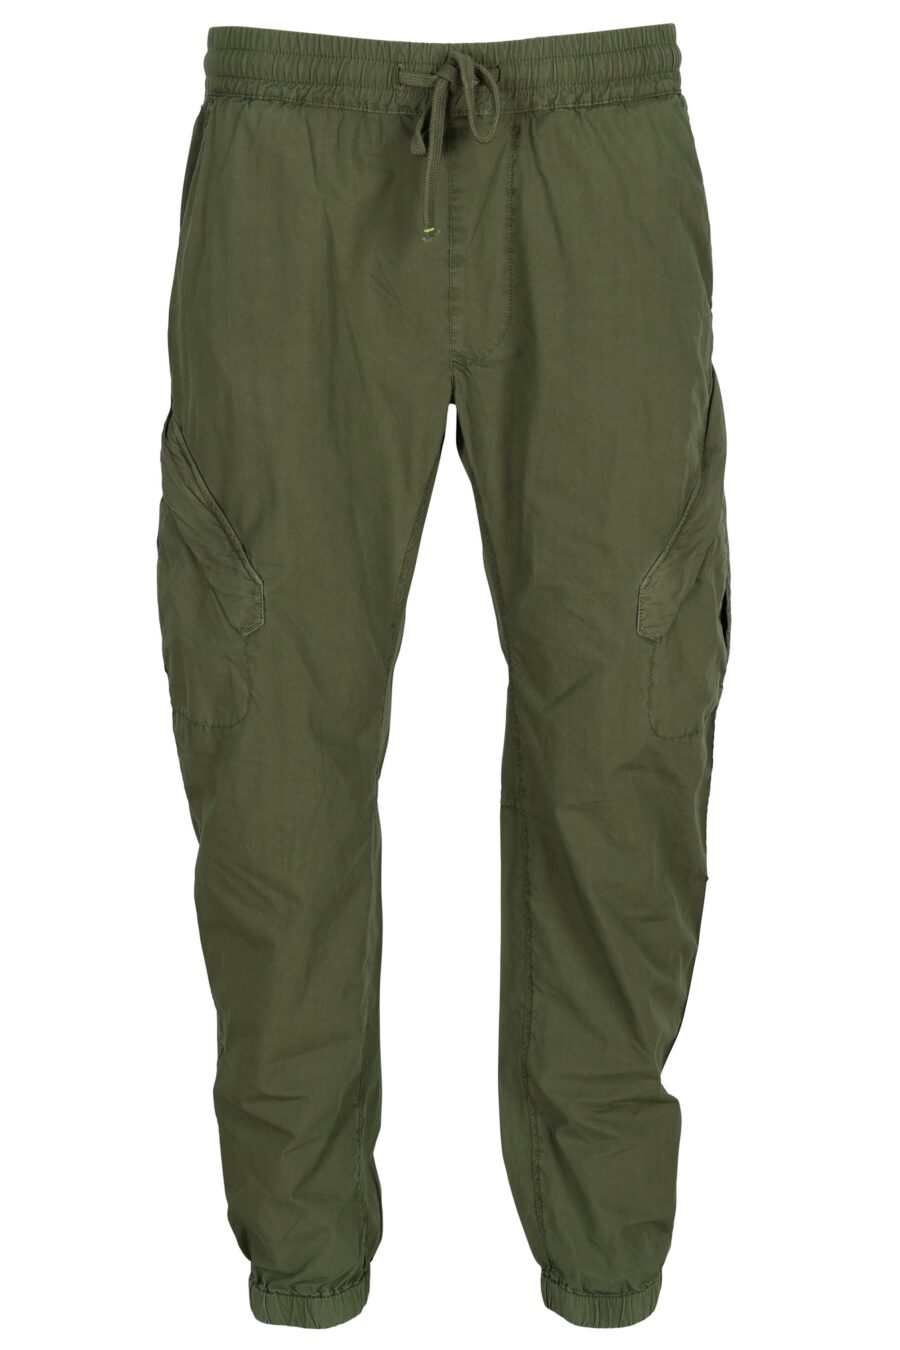 Pantalón verde militar estilo cargo con resorte - 8058610767143